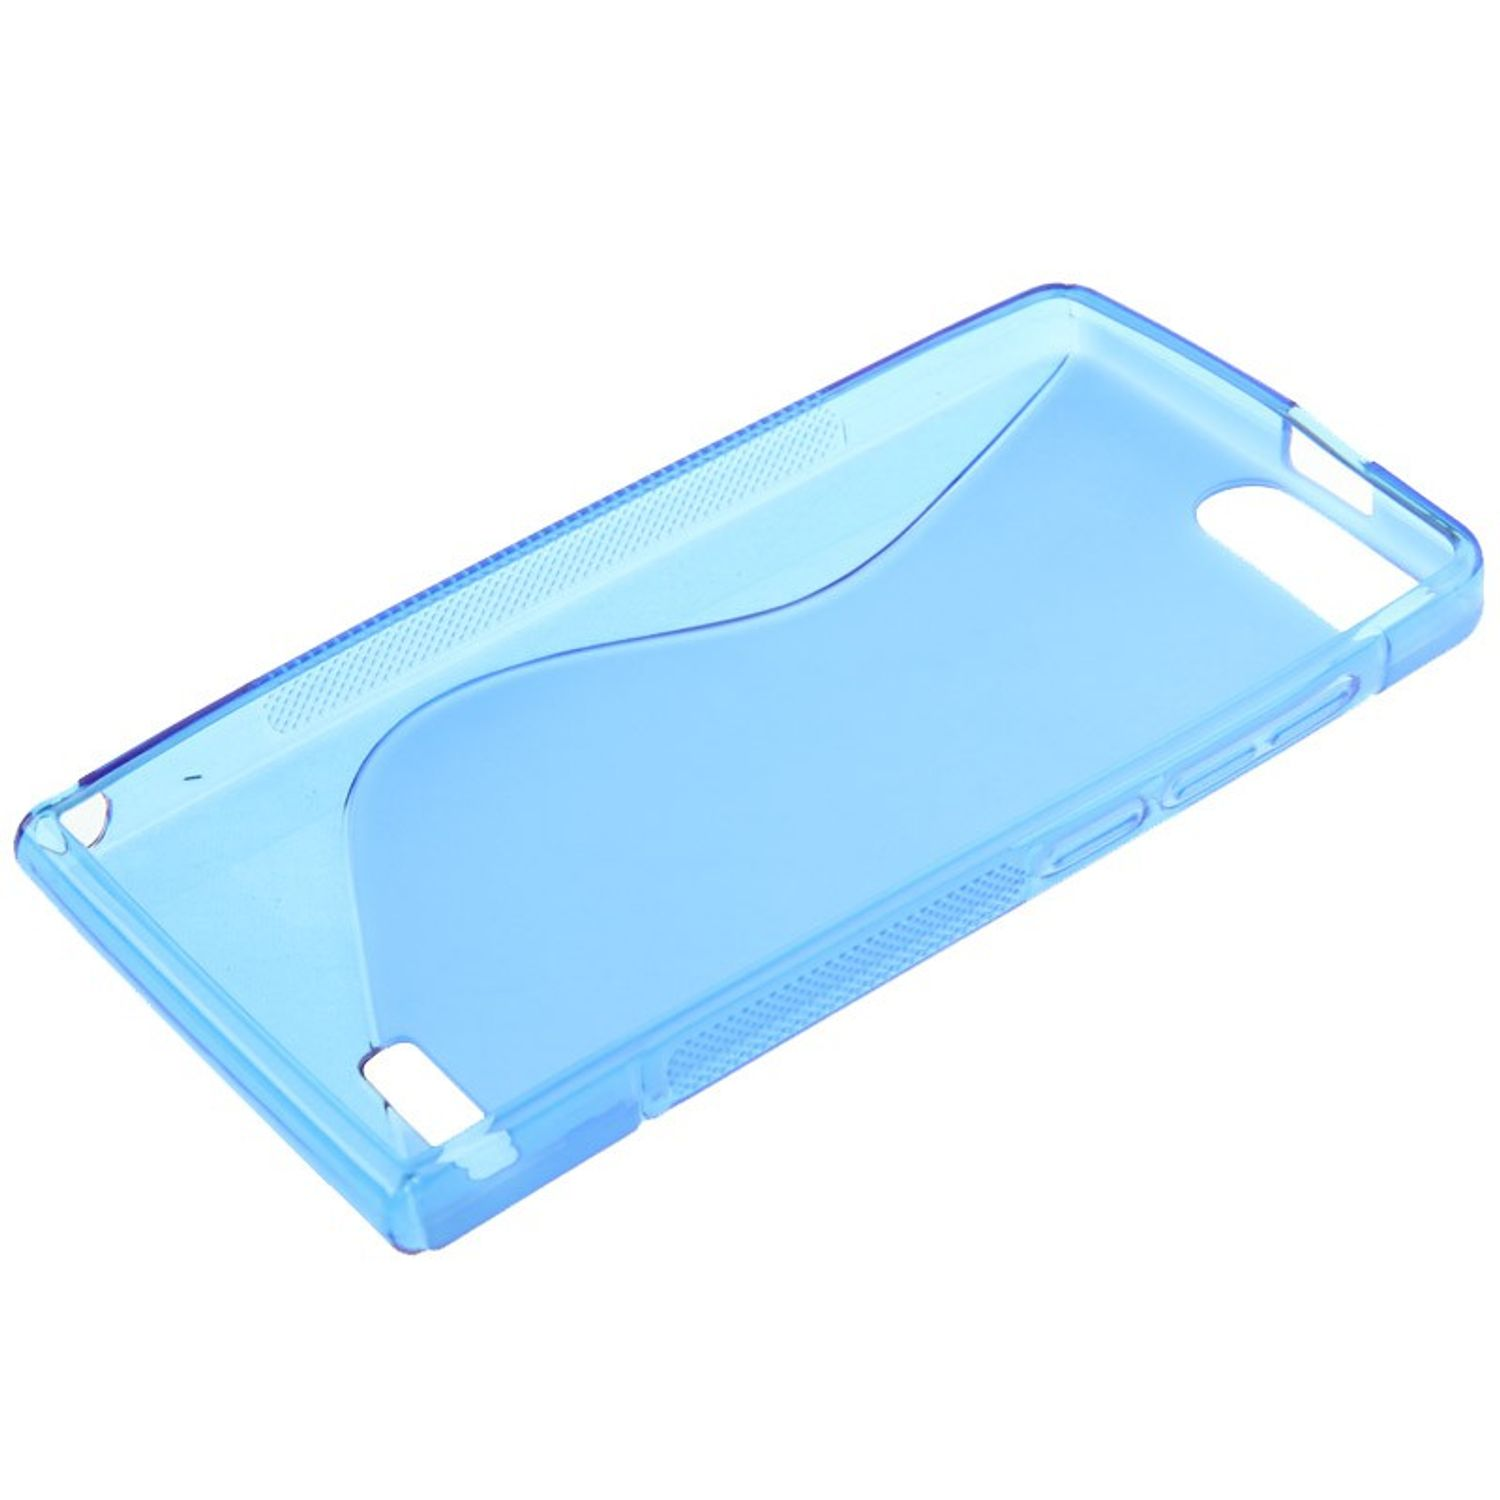 KÖNIG DESIGN Blau P7 mini, Ascend Huawei, Backcover, Handyhülle